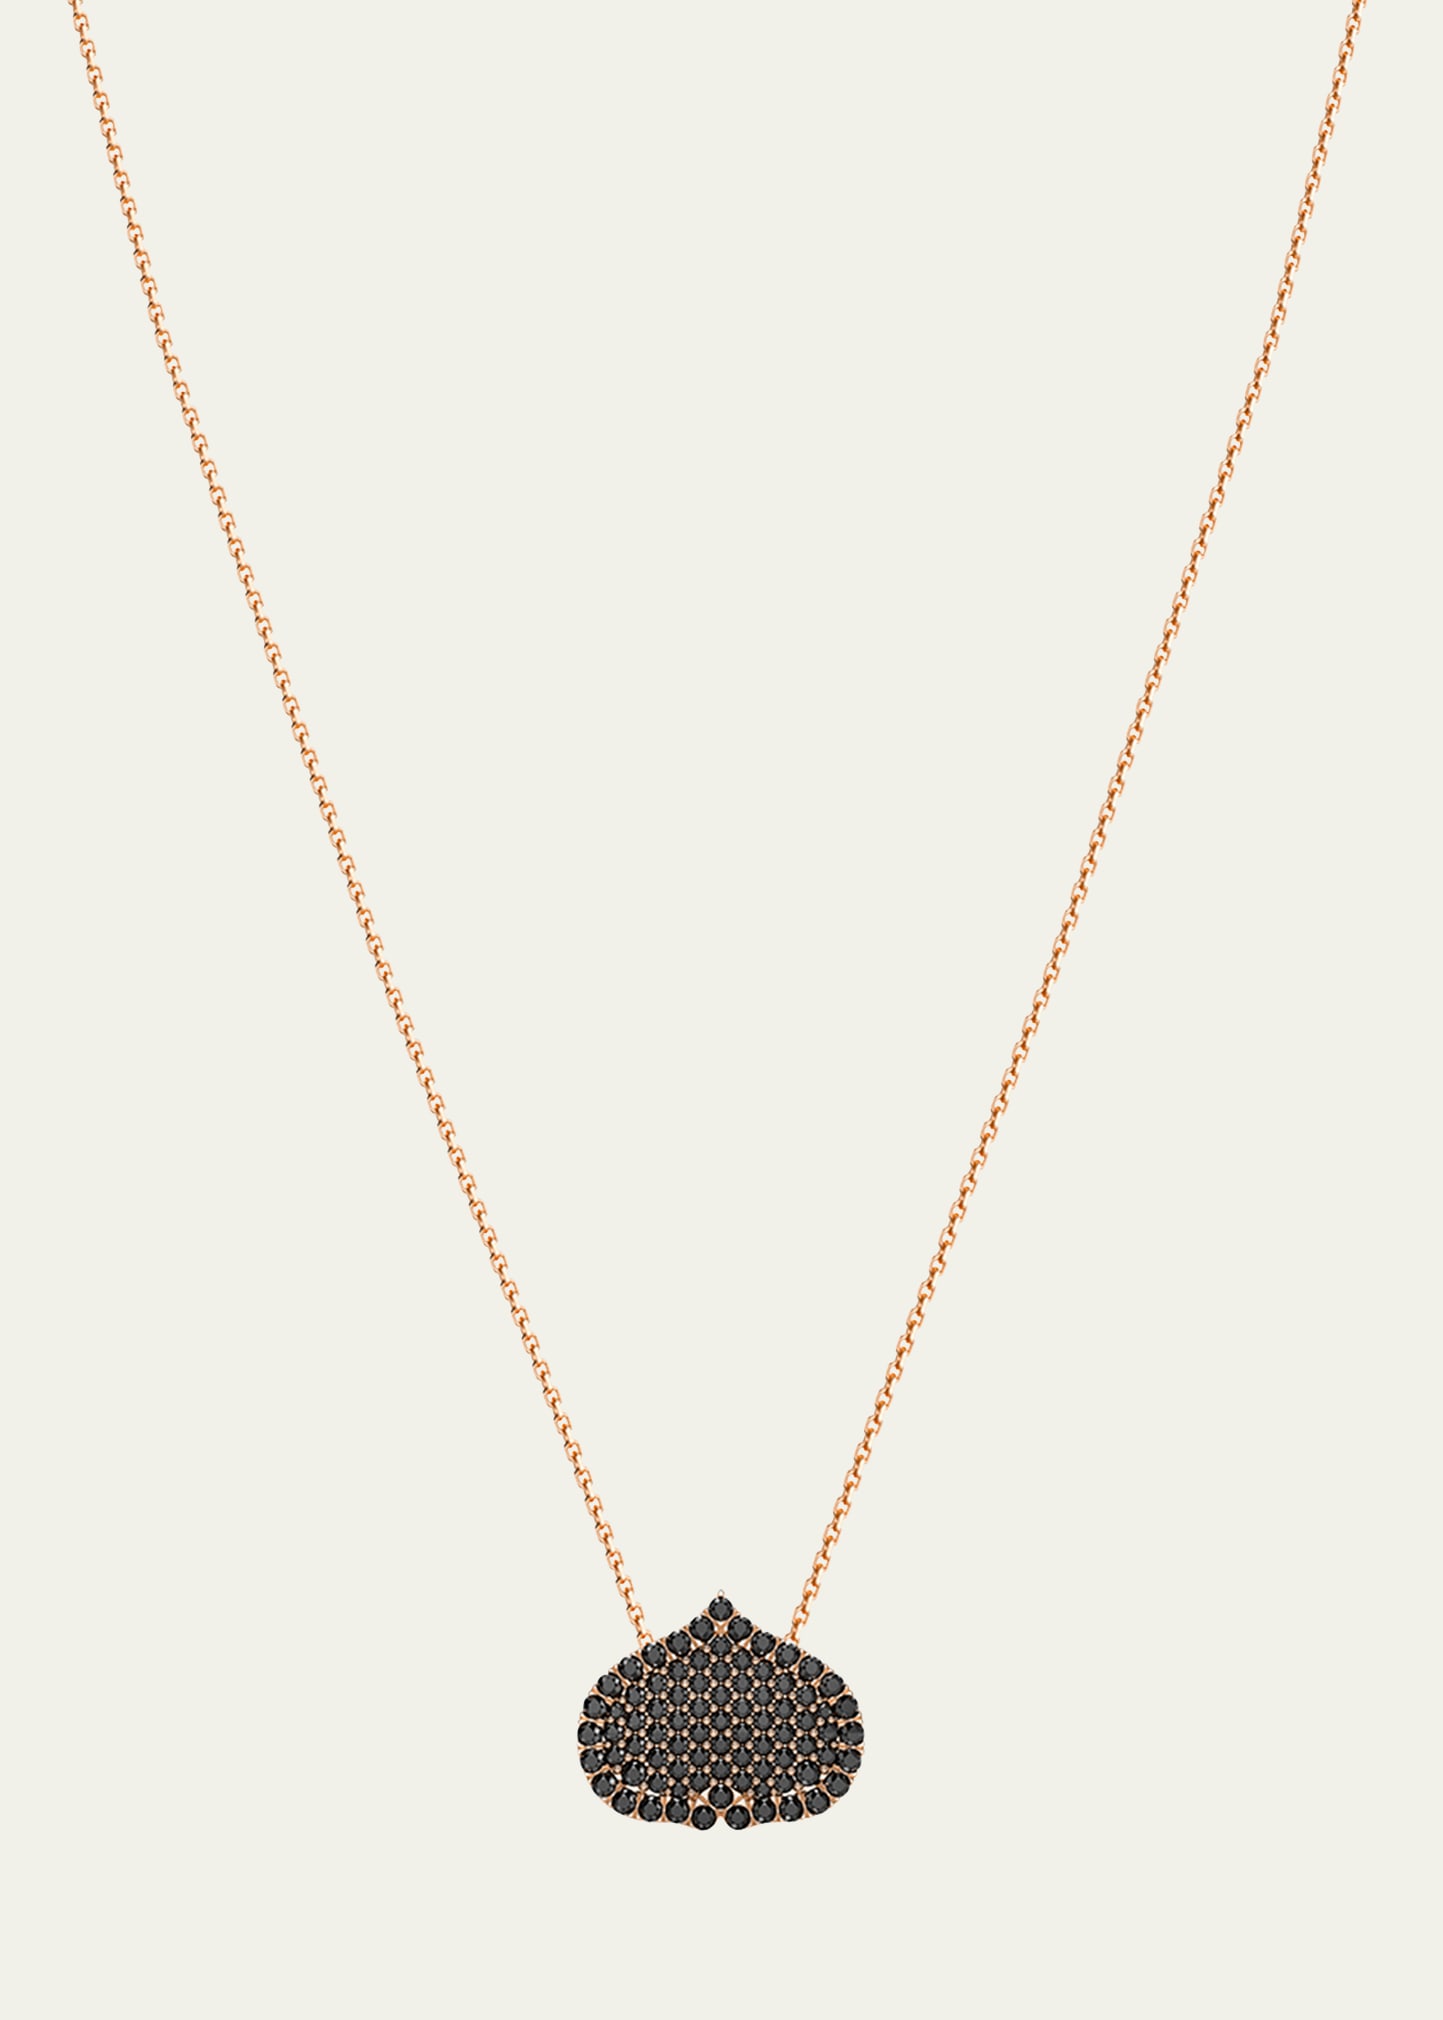 Eye Adore Diamond Pave Pendant Necklace, 15mm